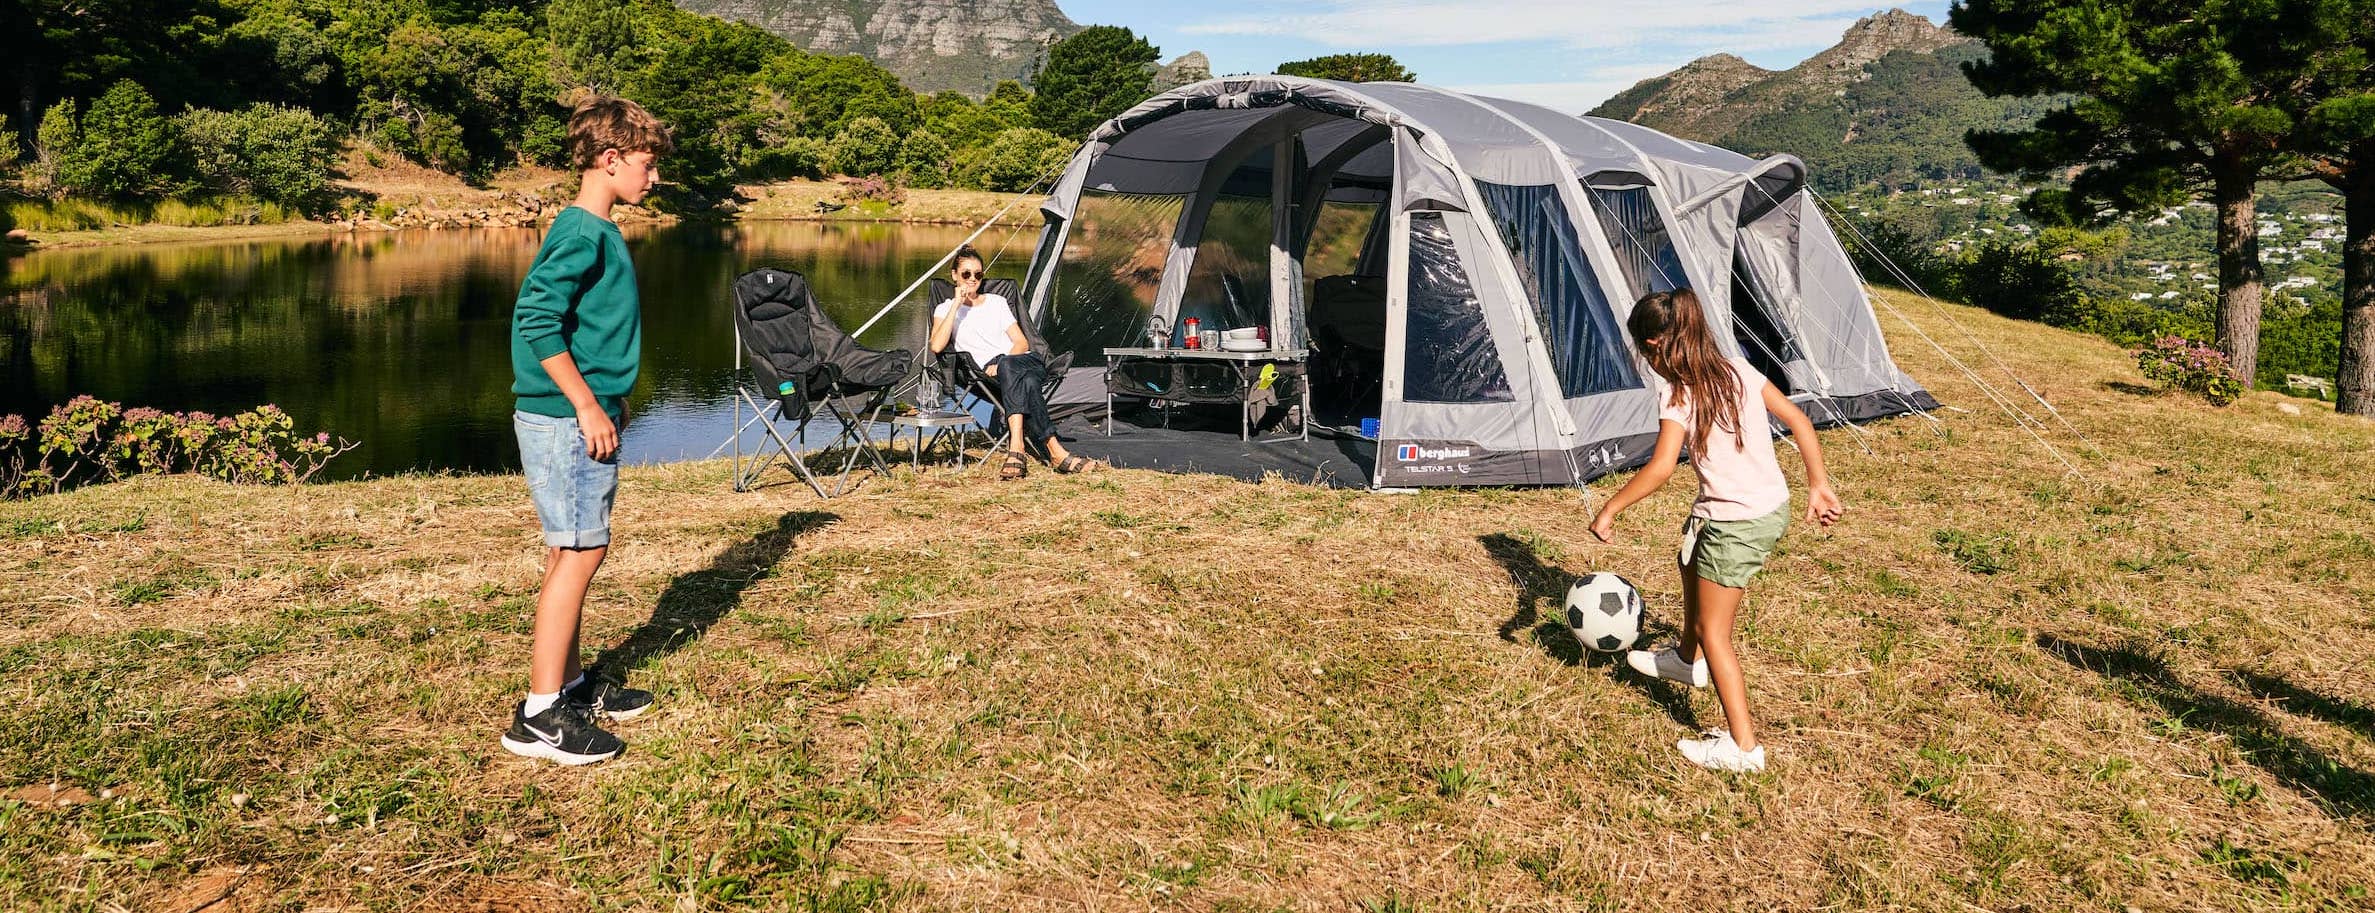 Go outdoors berghaus tent